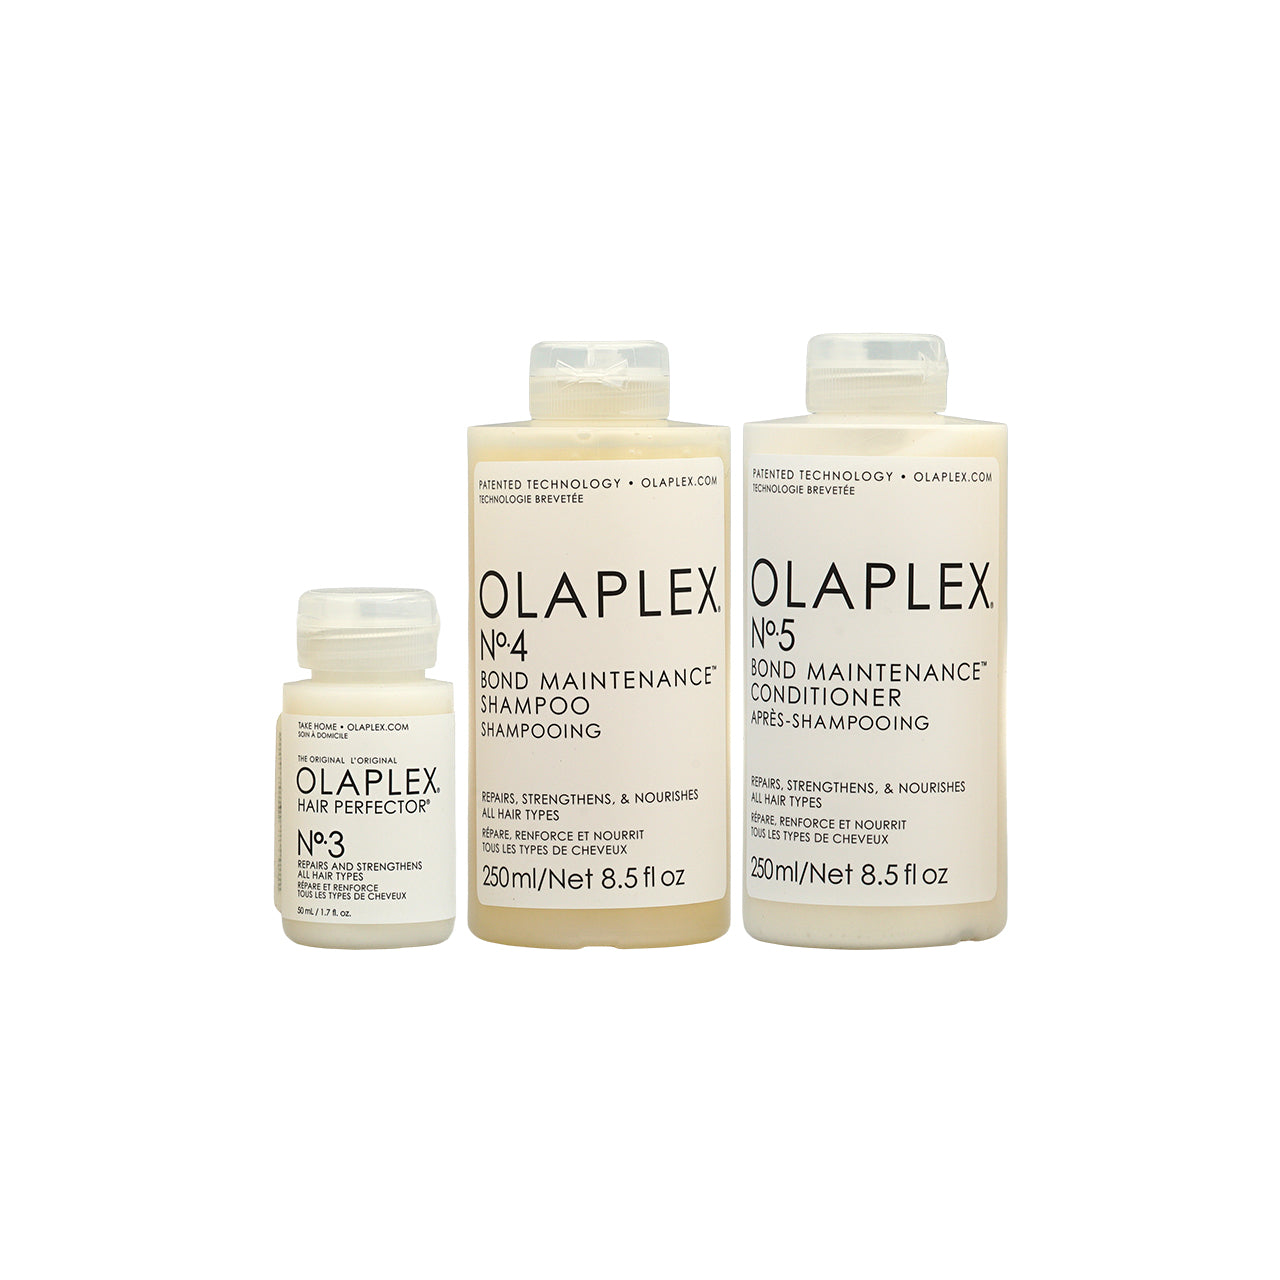 Olaplex Strong Day Ahead Hair Kit 3pcs | Sasa Global eShop